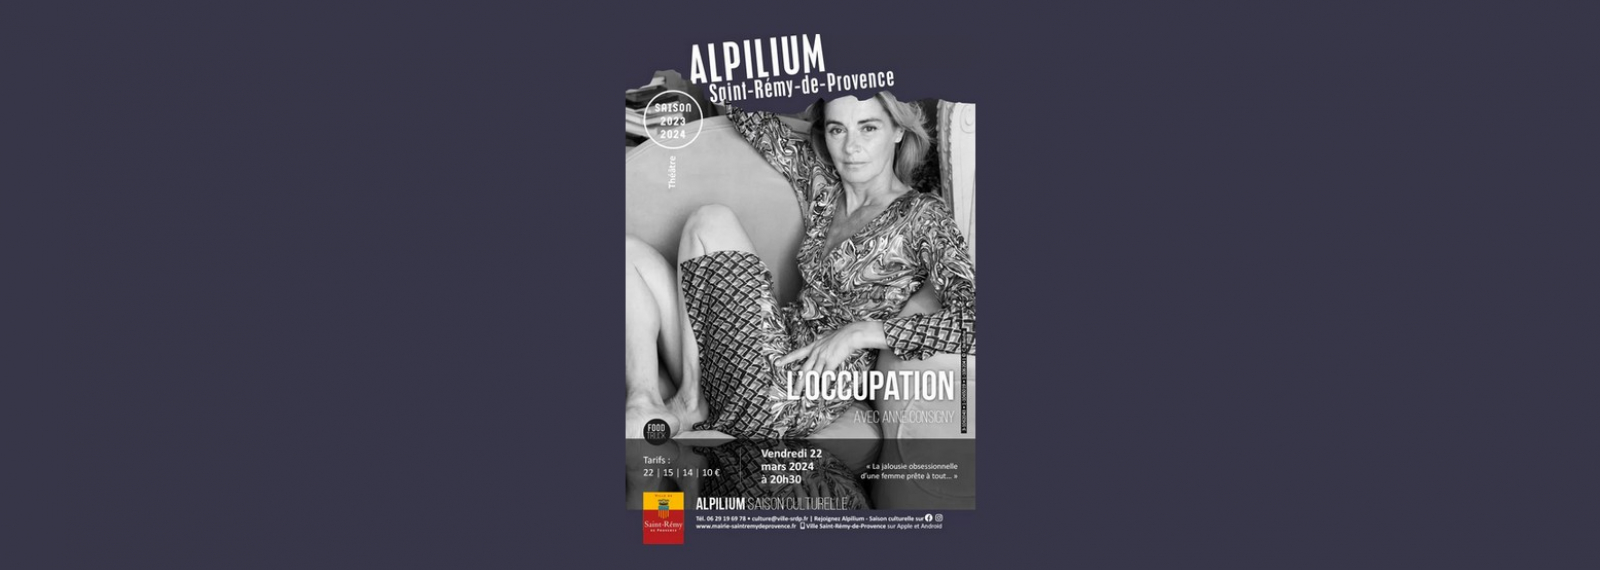 Alpilium : L'occupation Anne Consigny